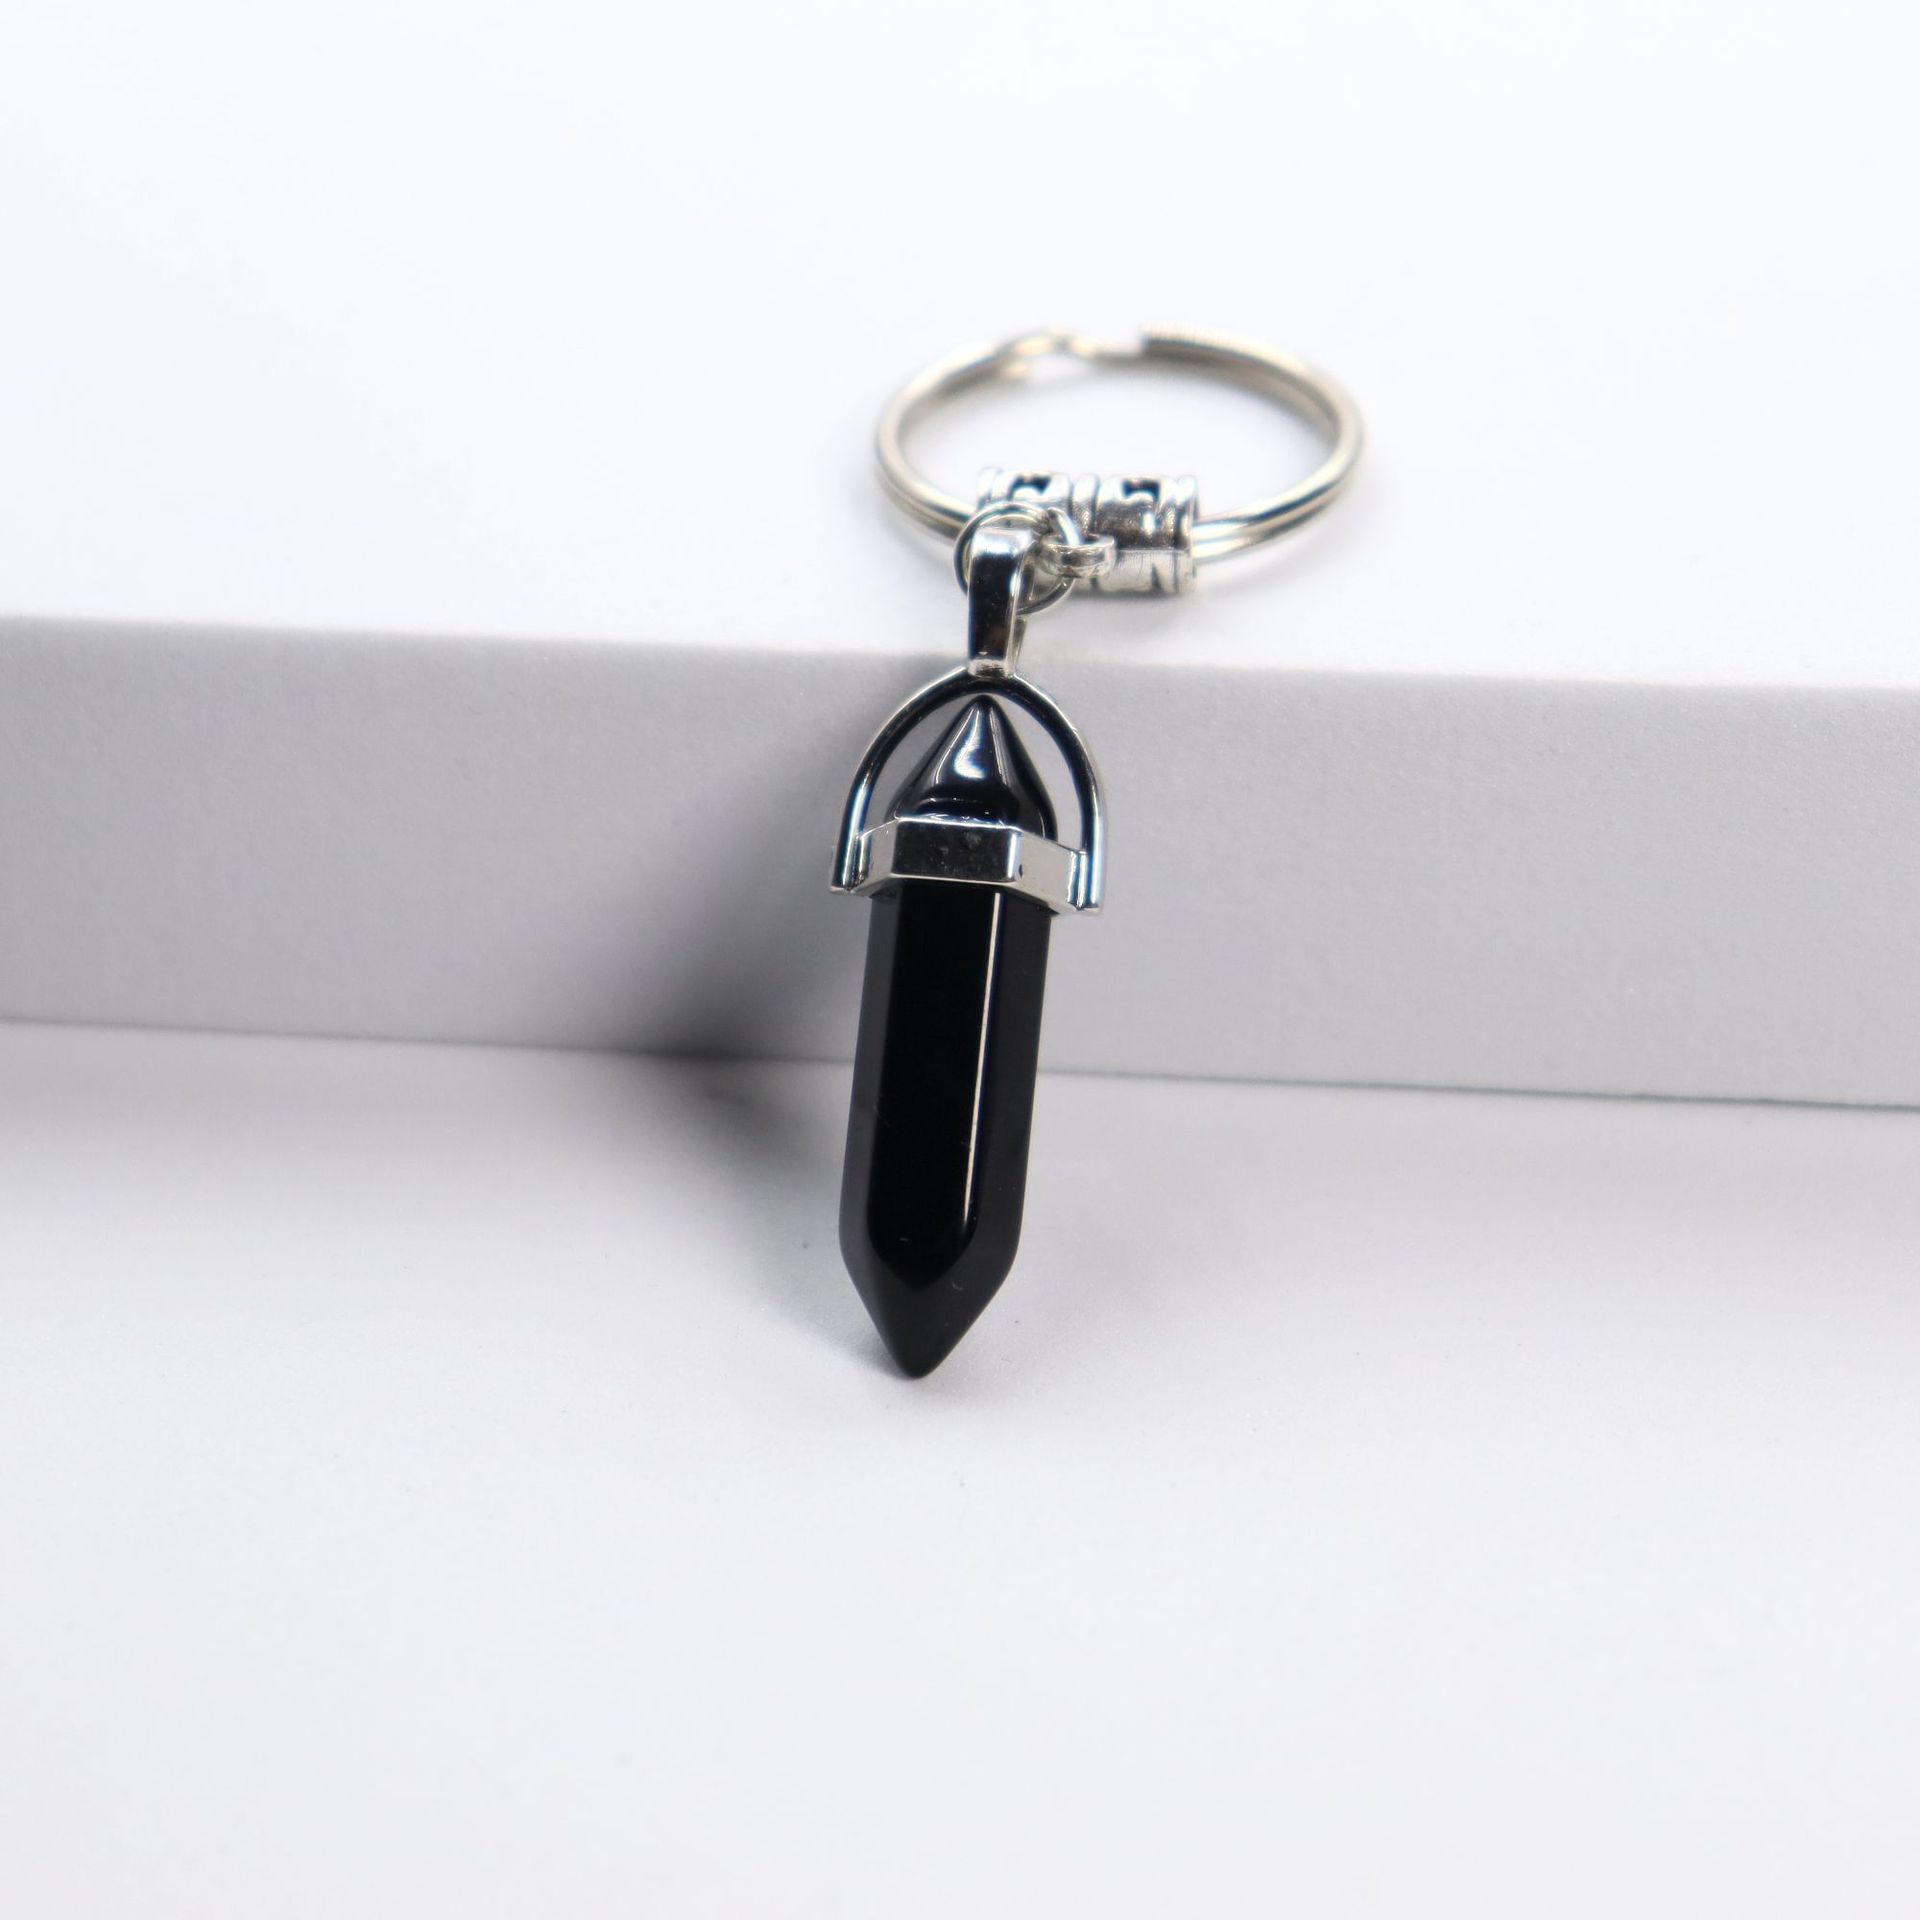 8:Schwarzer Obsidian